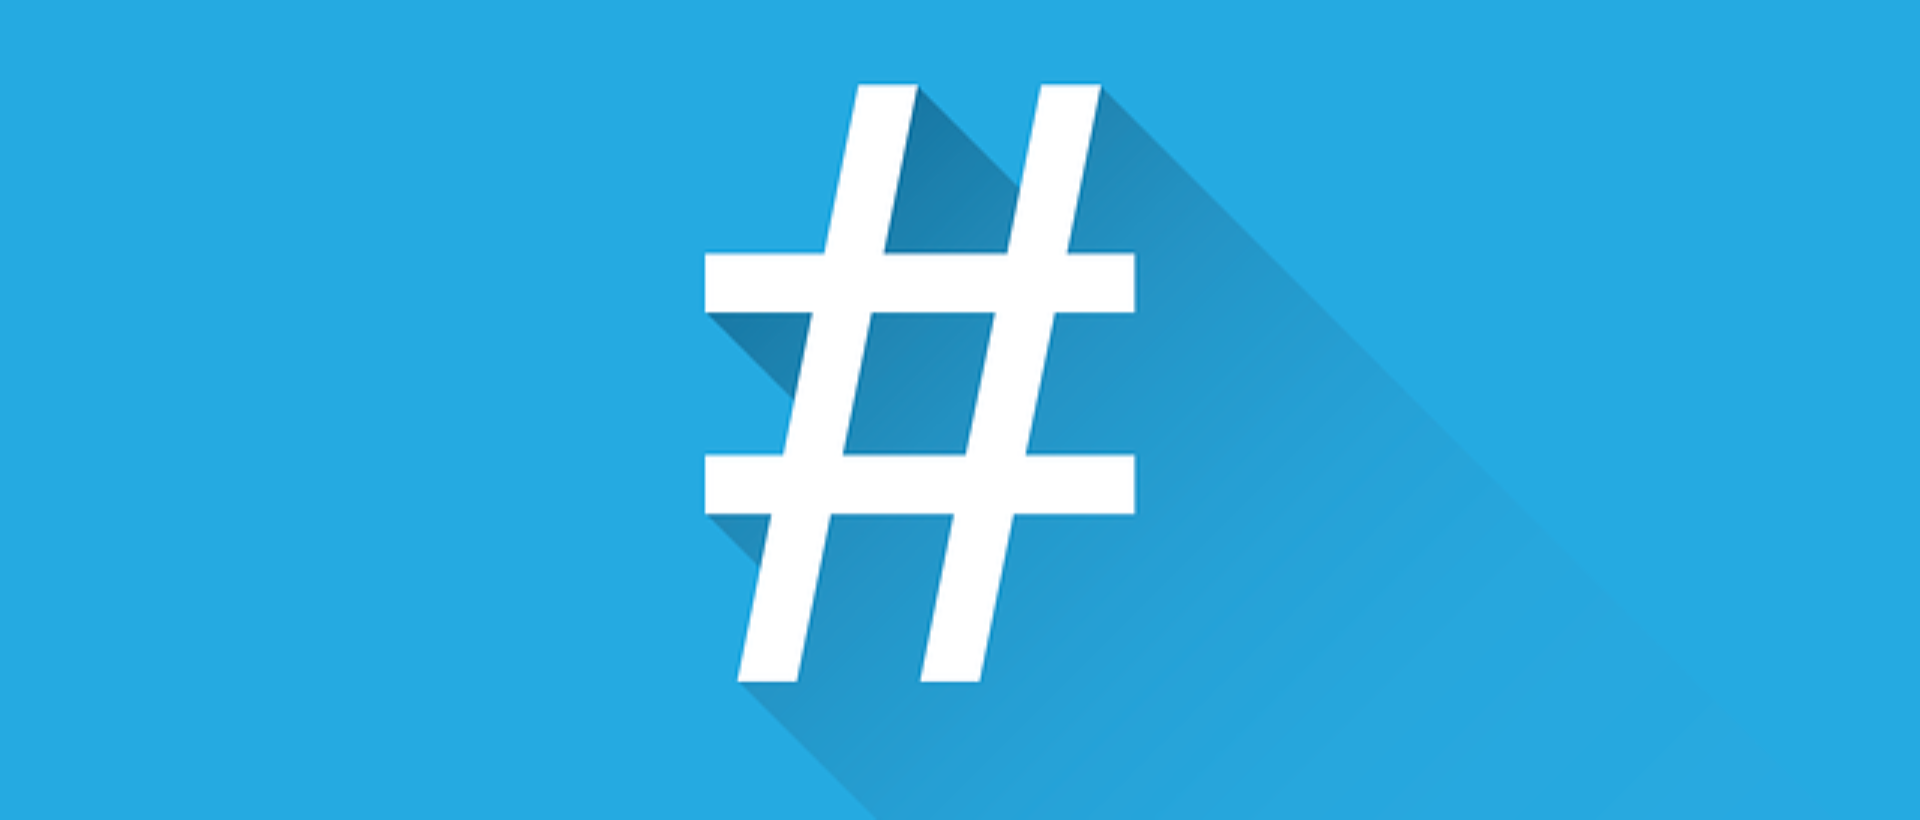 Die optimale Anzahl von Hashtags je nach Social Media Kanal